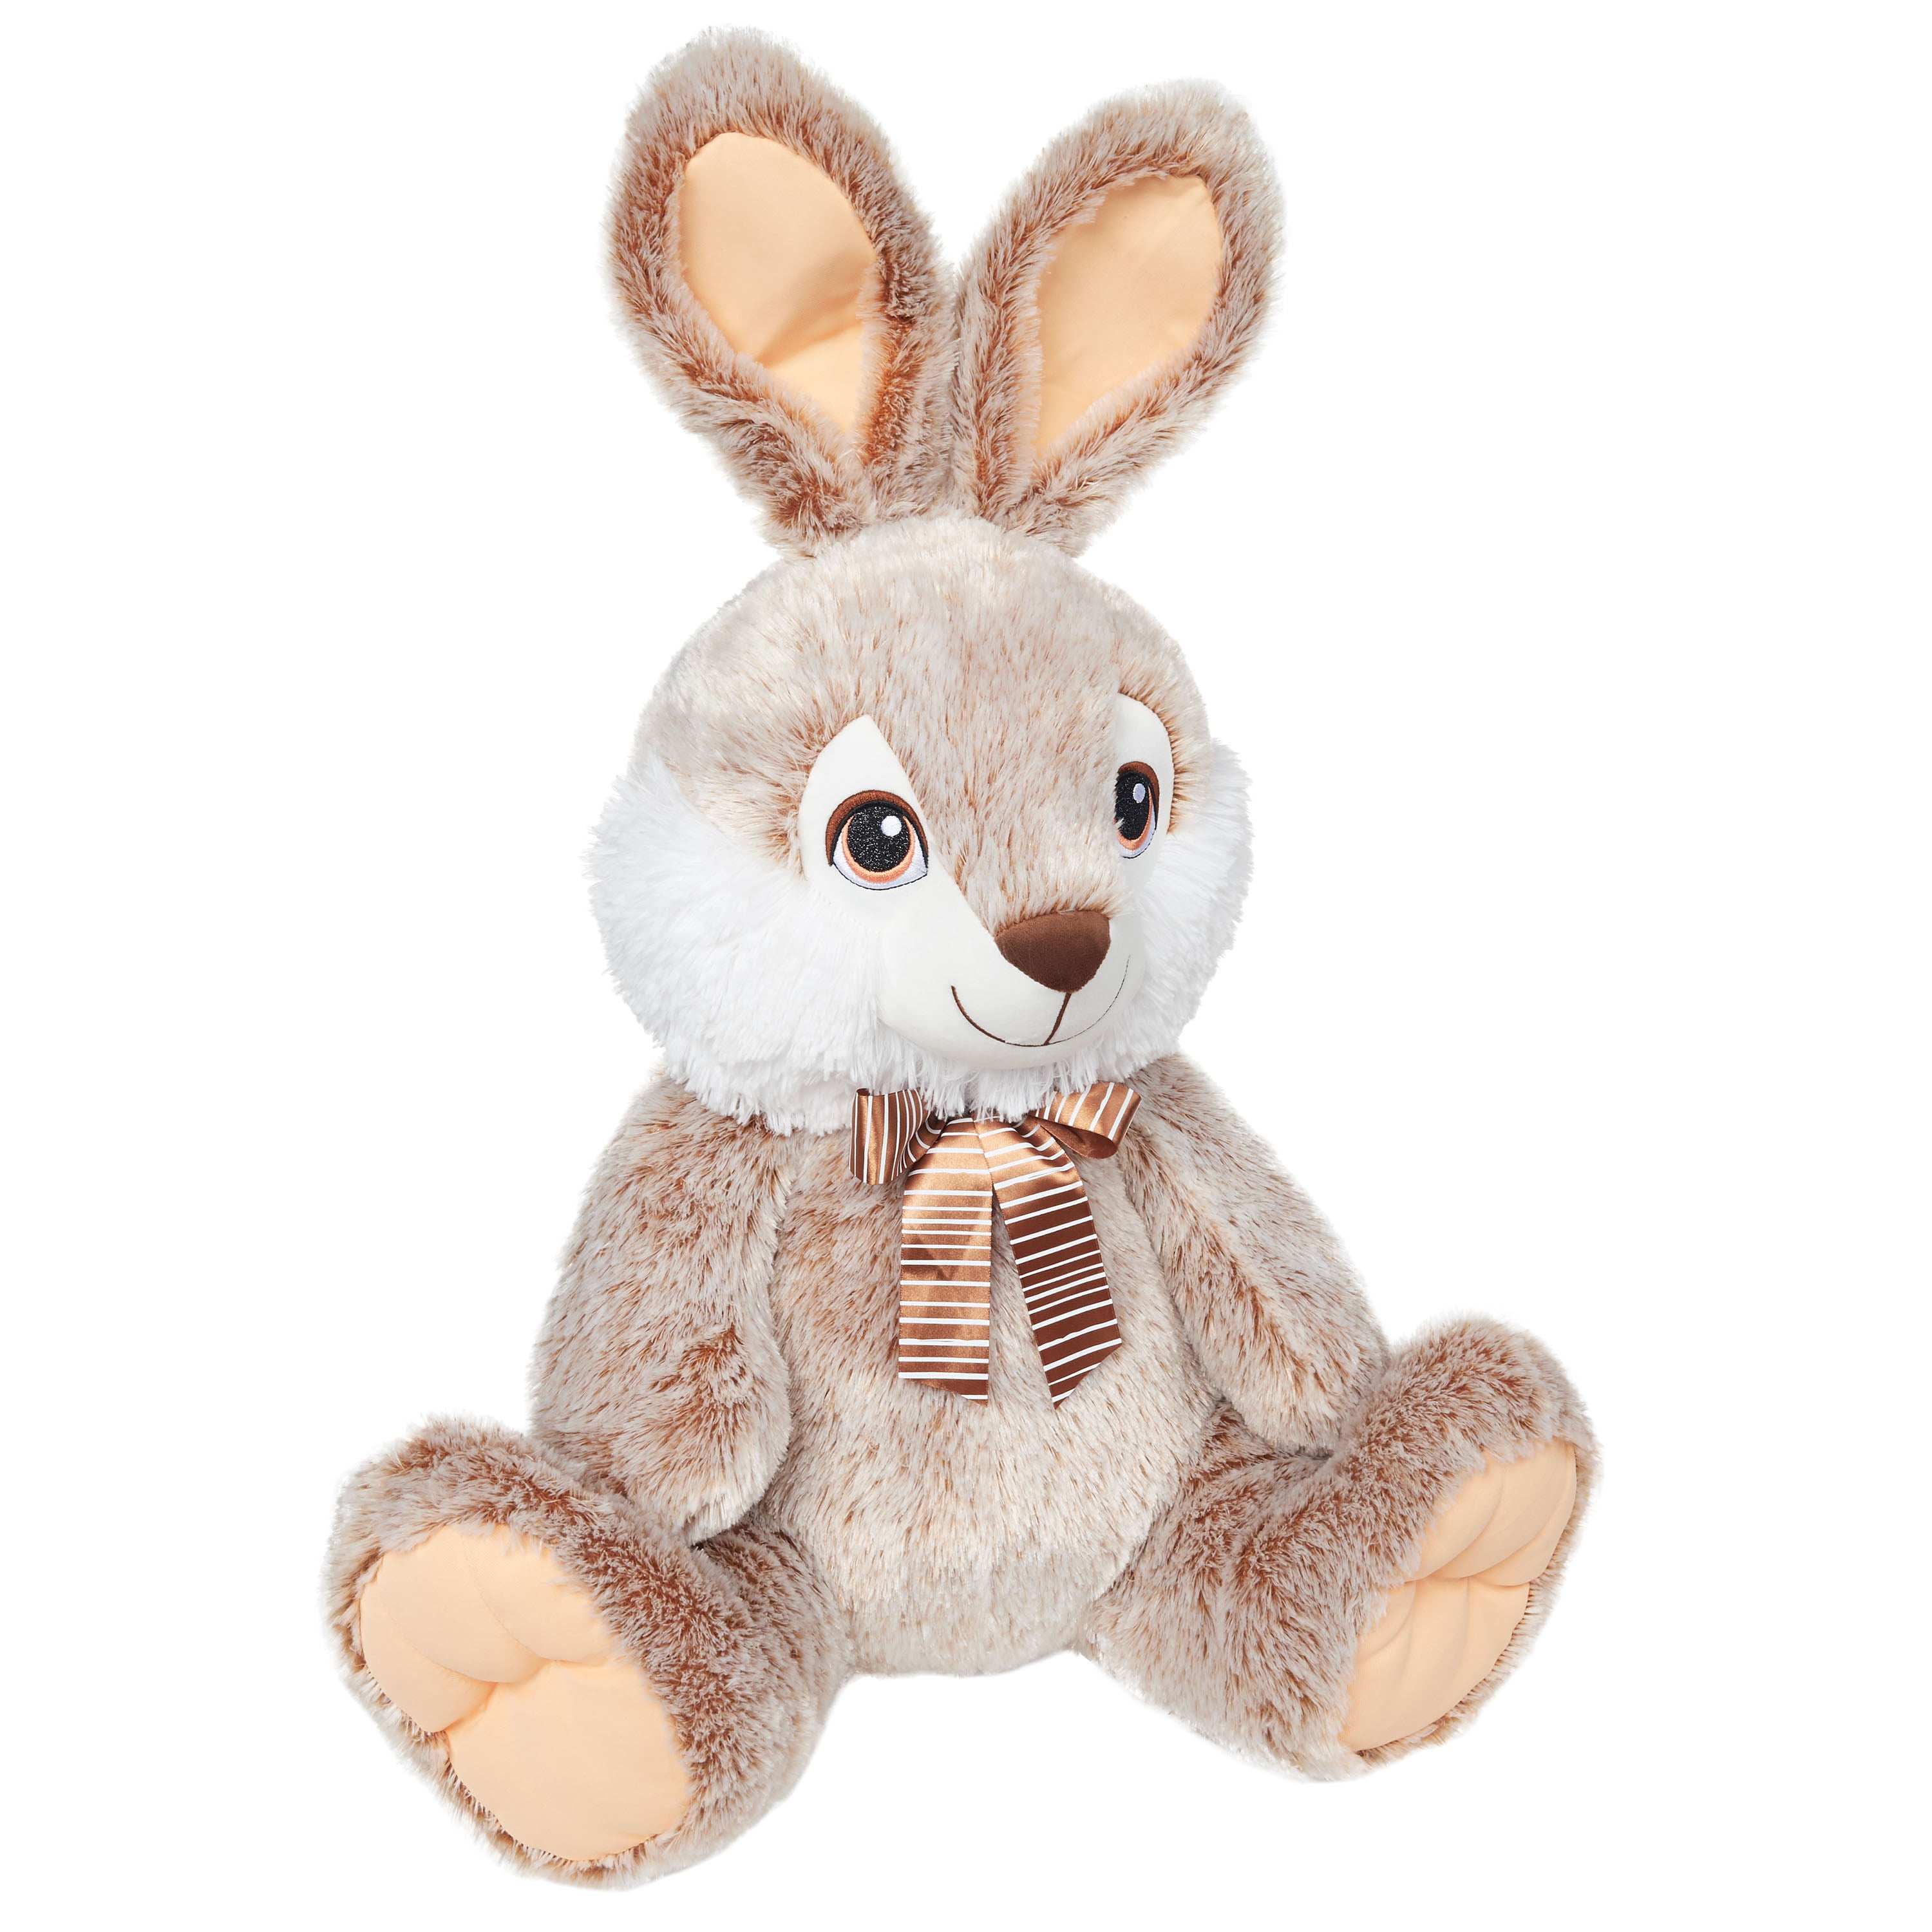 Baby Bouncy 5" Bunny Rabbit Grey Floppy Ears Plush Soft Toy by Russ